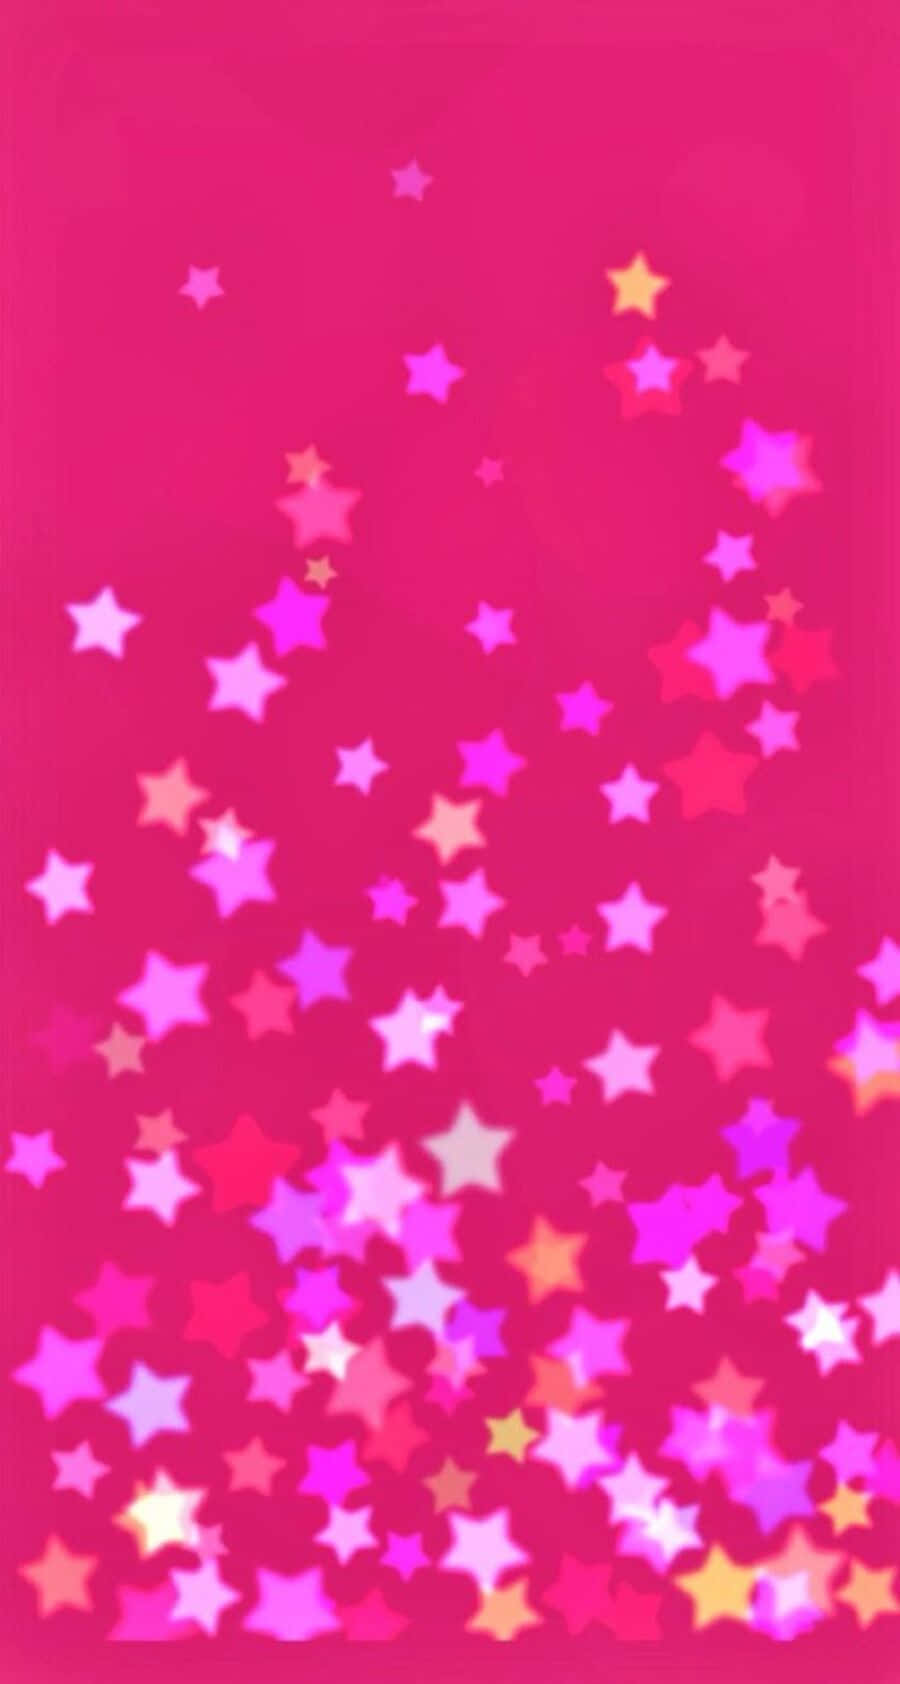 Dreamy Pink Stars In The Night Sky